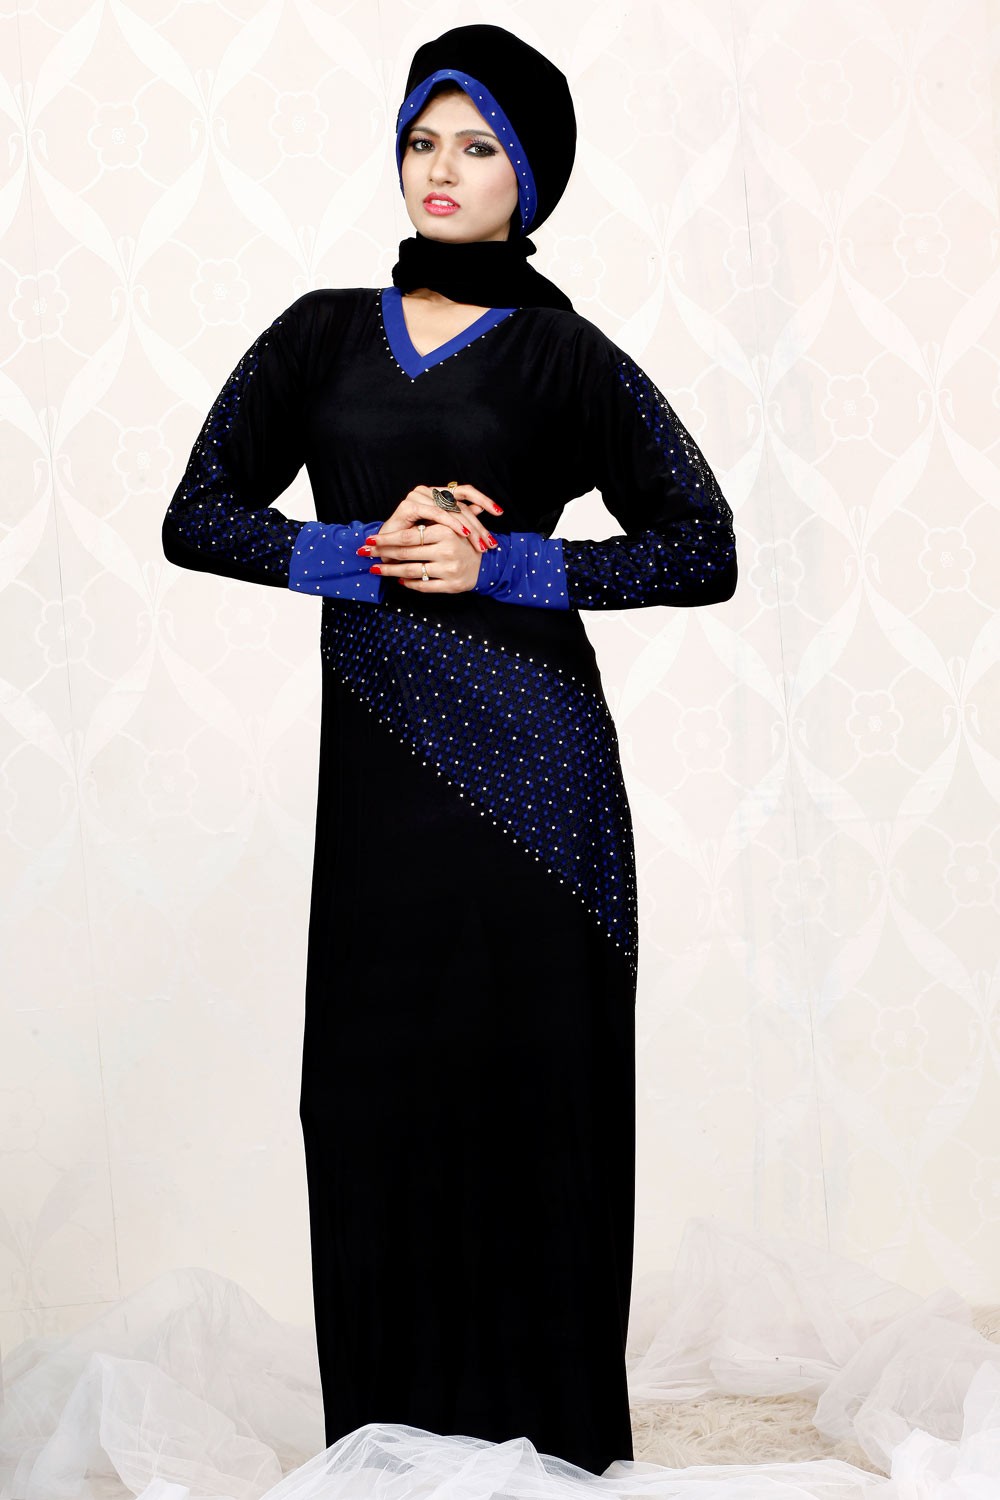 Elegant Modern Hijab Styles and Abaya Fashion 2017 for Girls Stylish